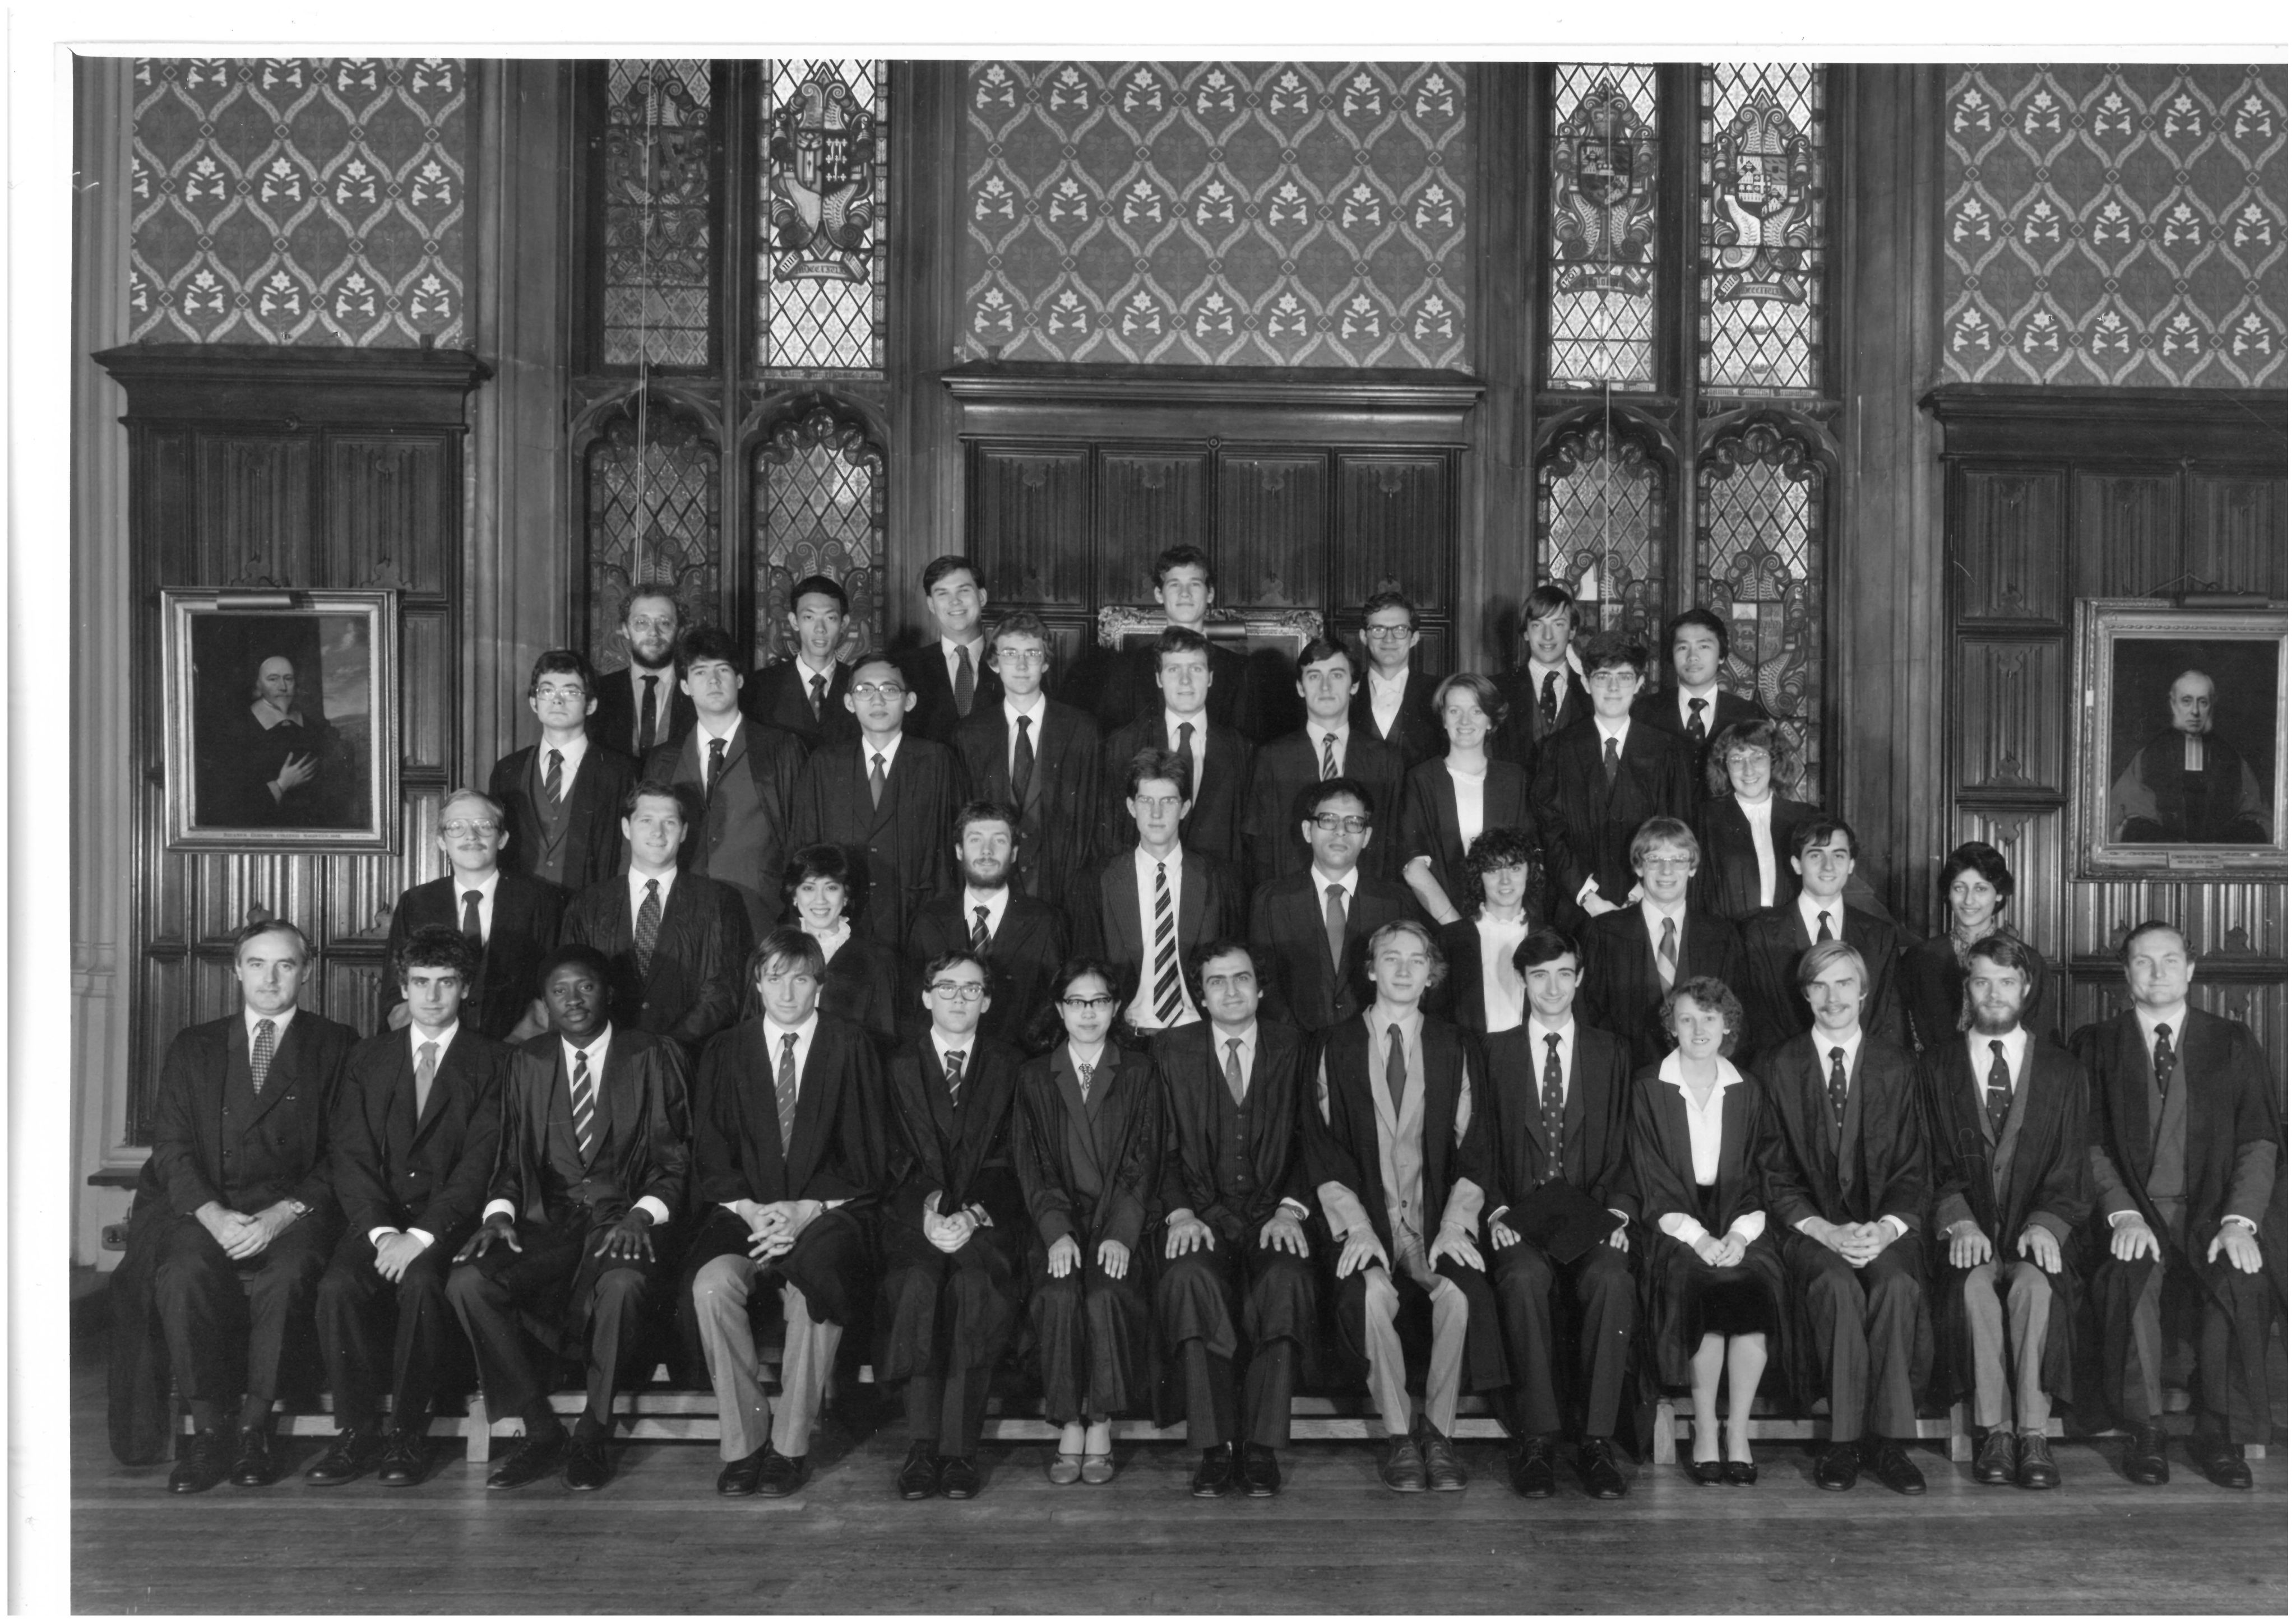 The 1983 Matriculation photo.